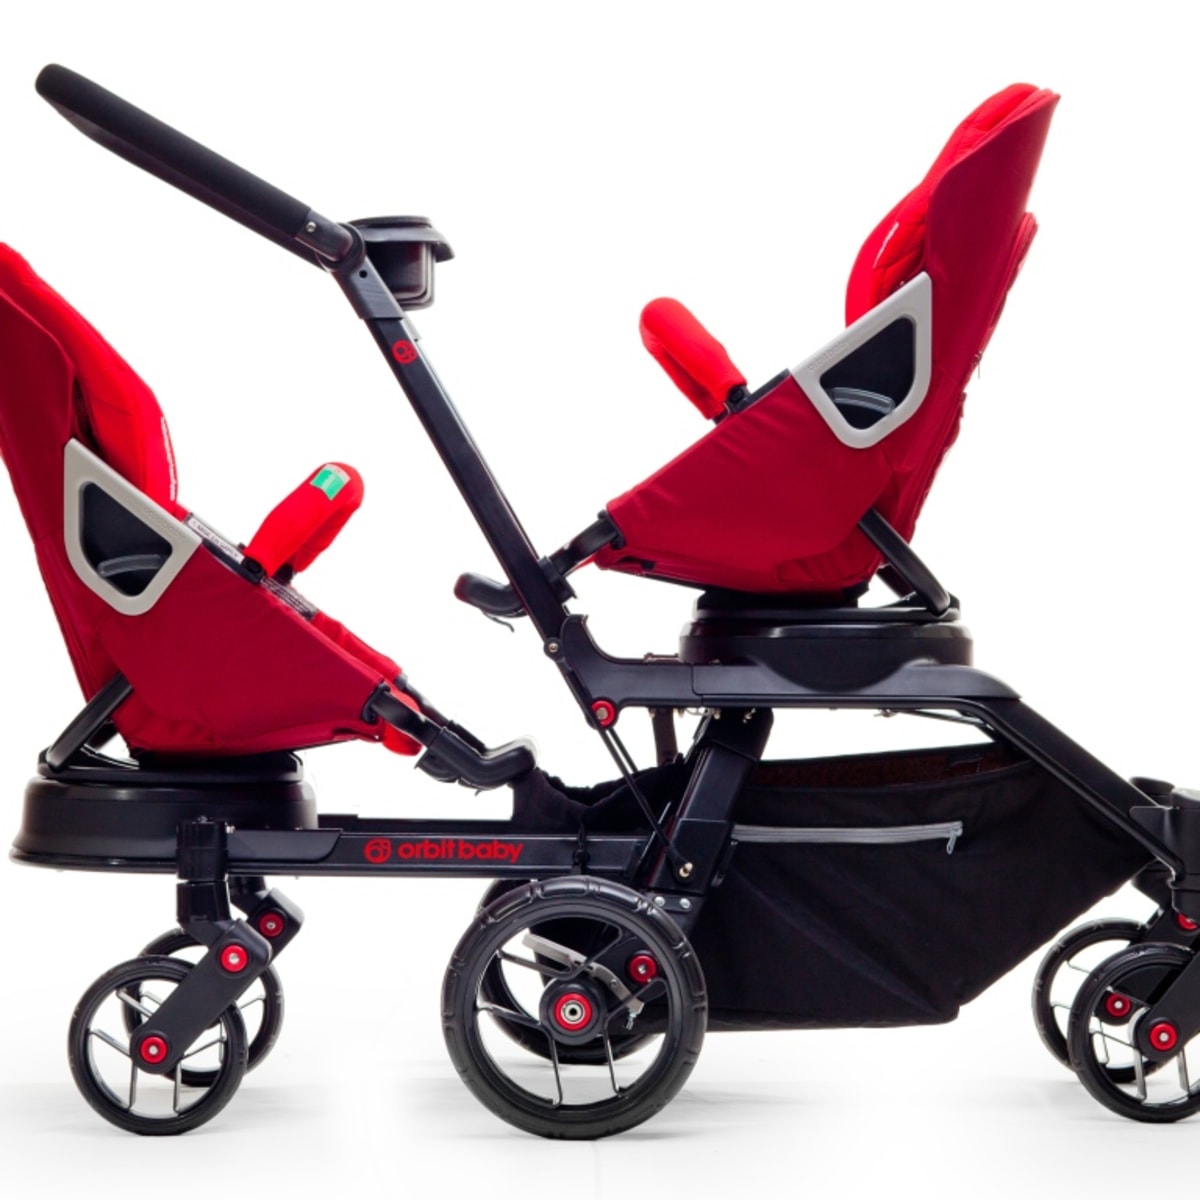 orbit baby baby strollers